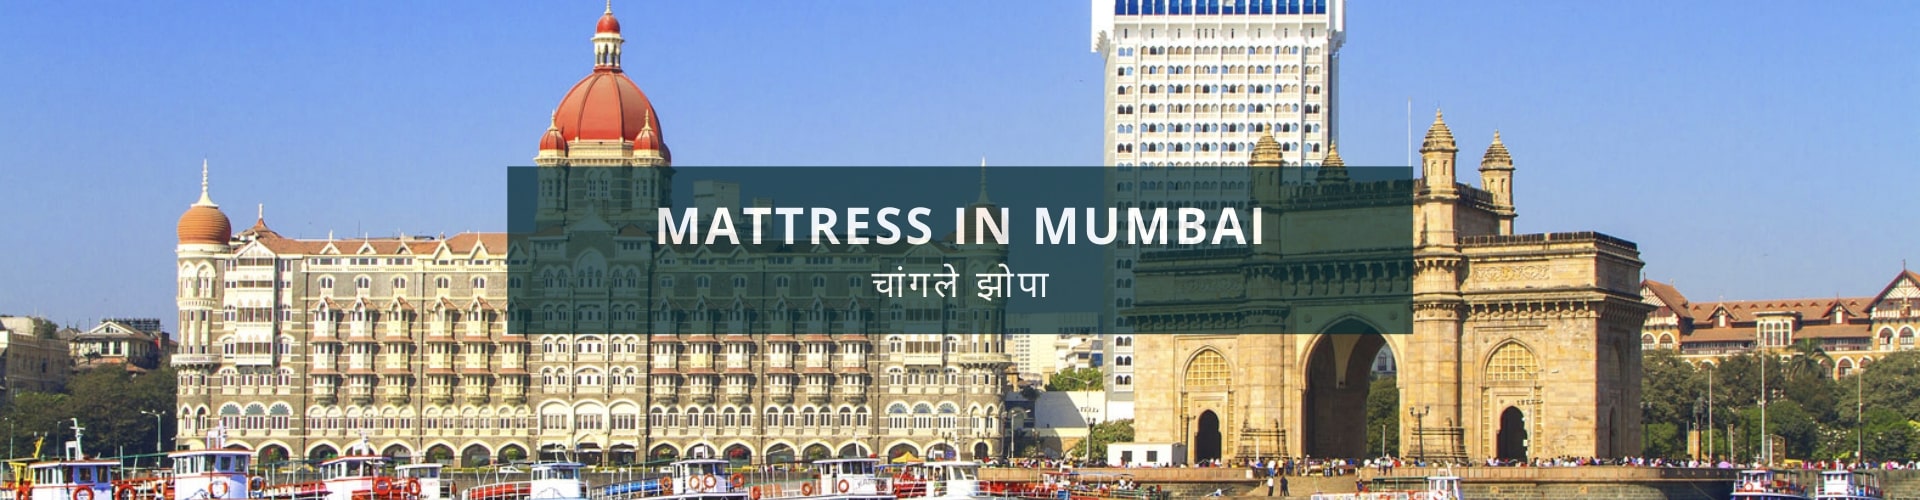 Buy mattress online in mumbai